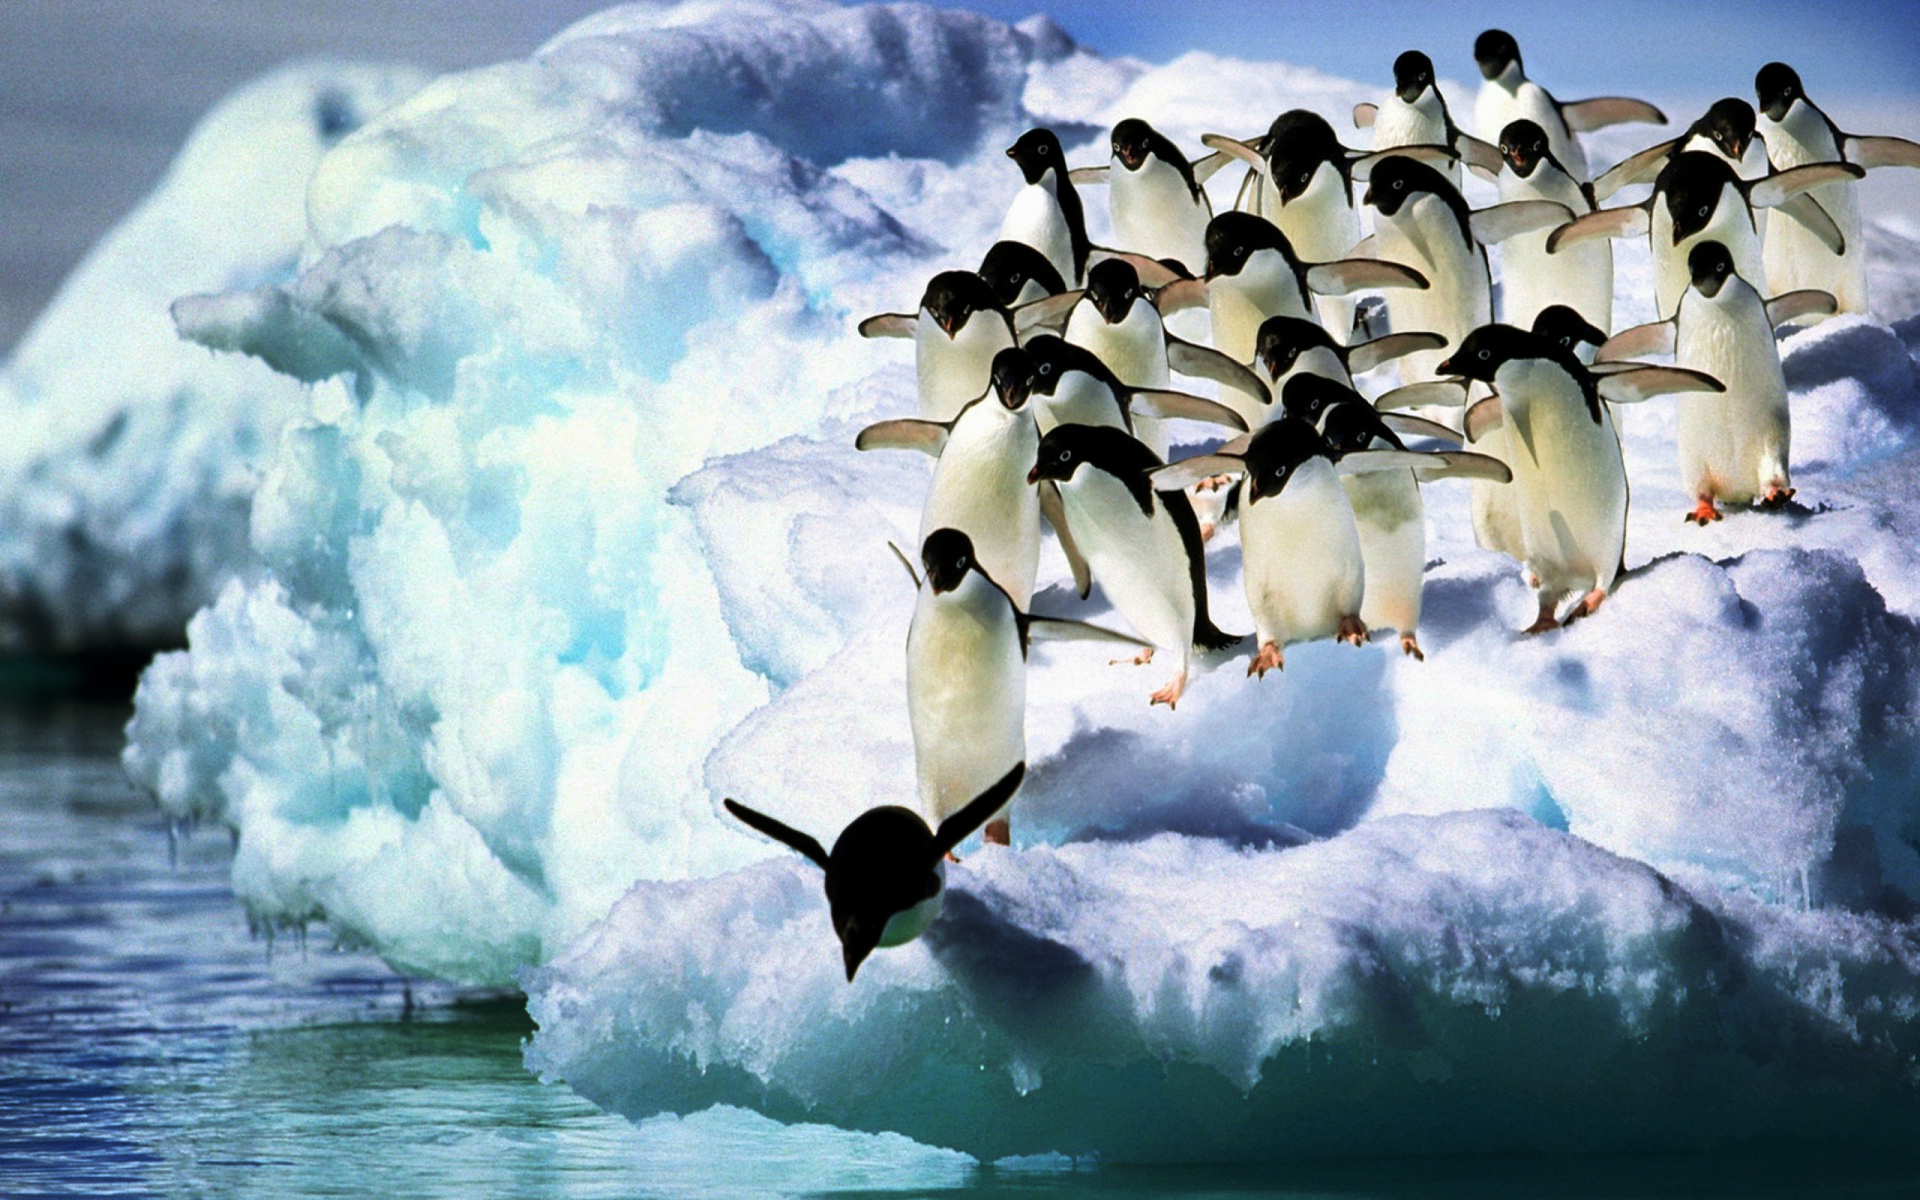 Descarga gratis la imagen Animales, Nieve, Pingüino, Aves, Pingüino Adelia en el escritorio de tu PC